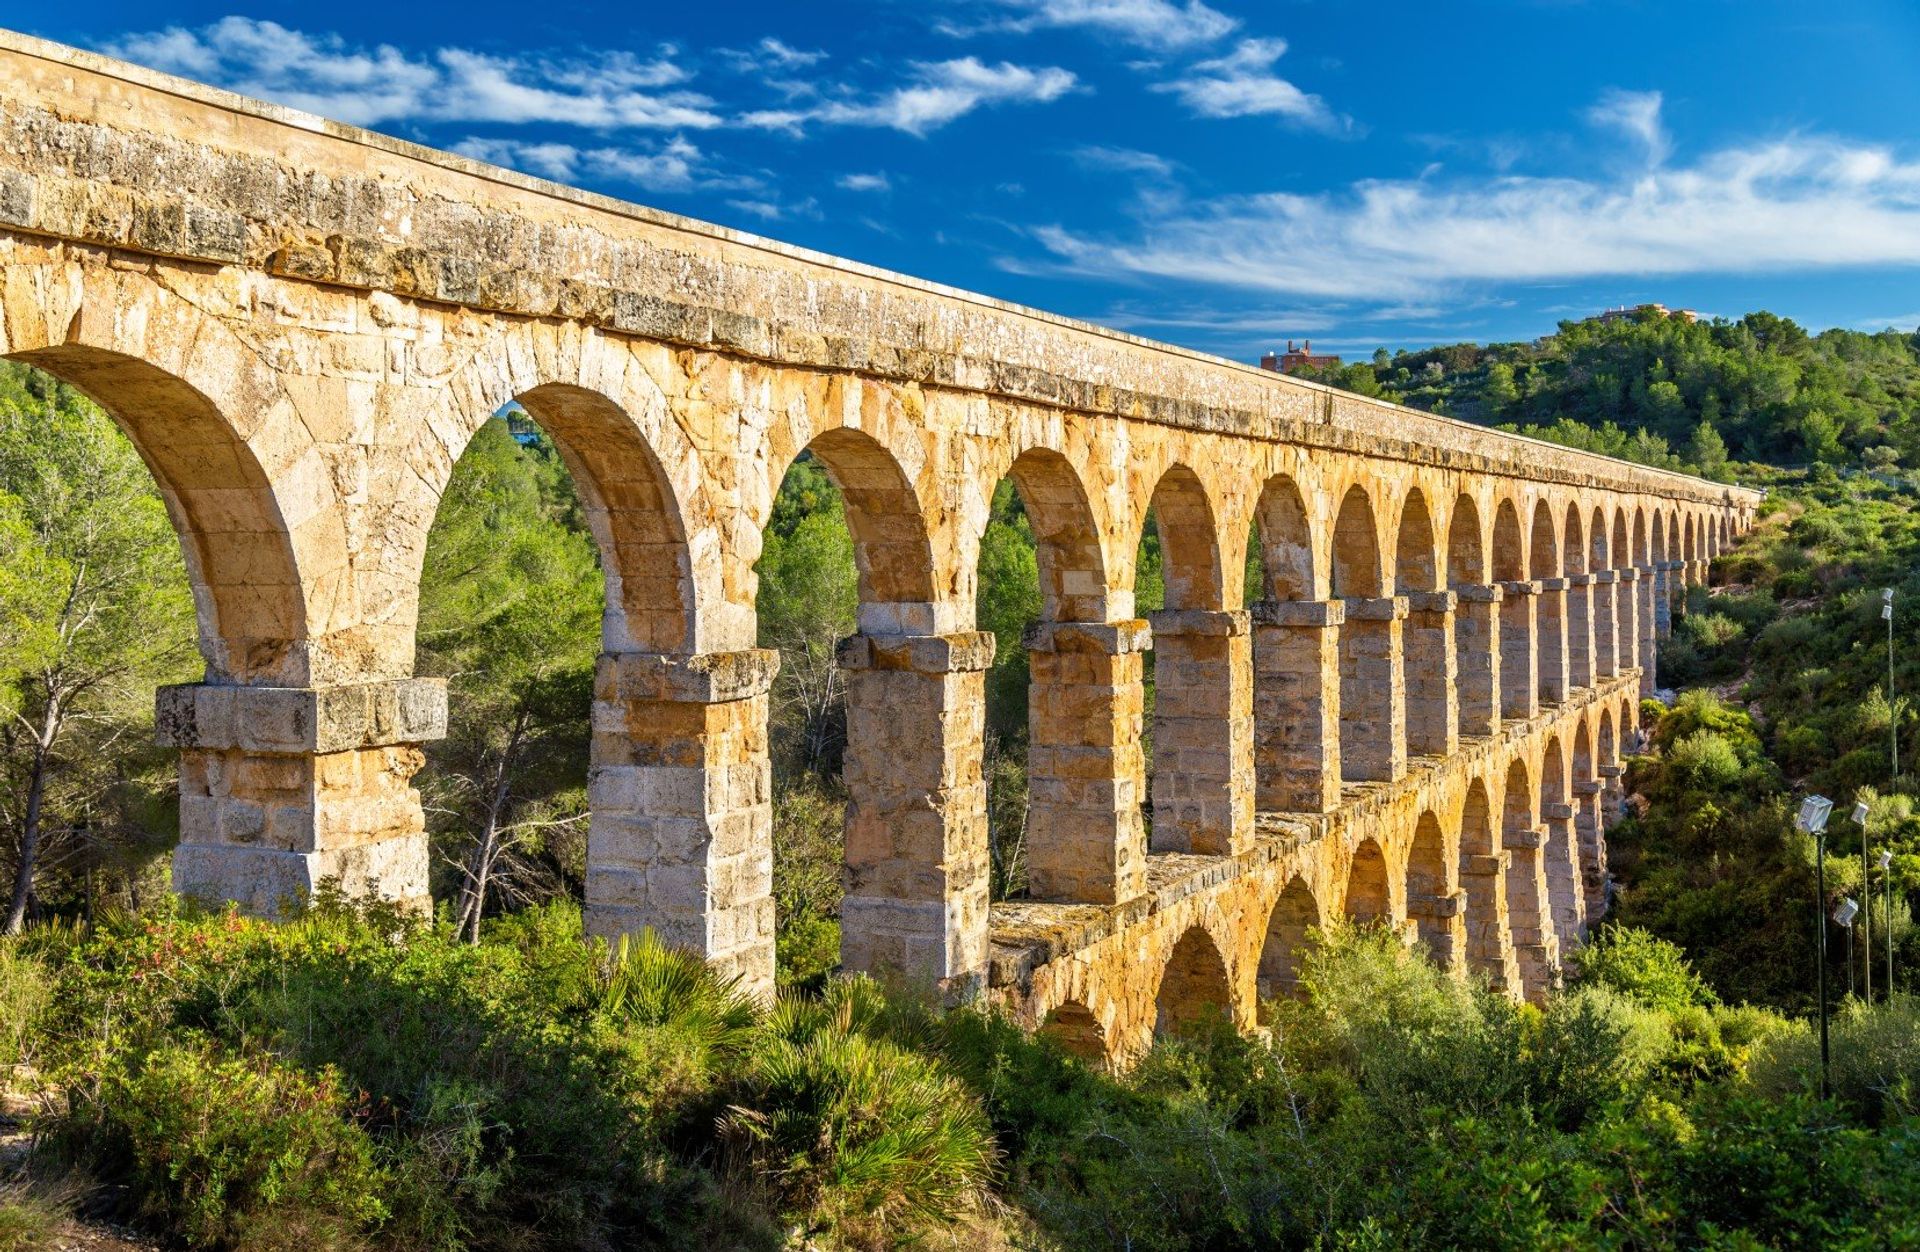 The Roman Aqueduct, Les Ferreres, also known as Pont del Diable